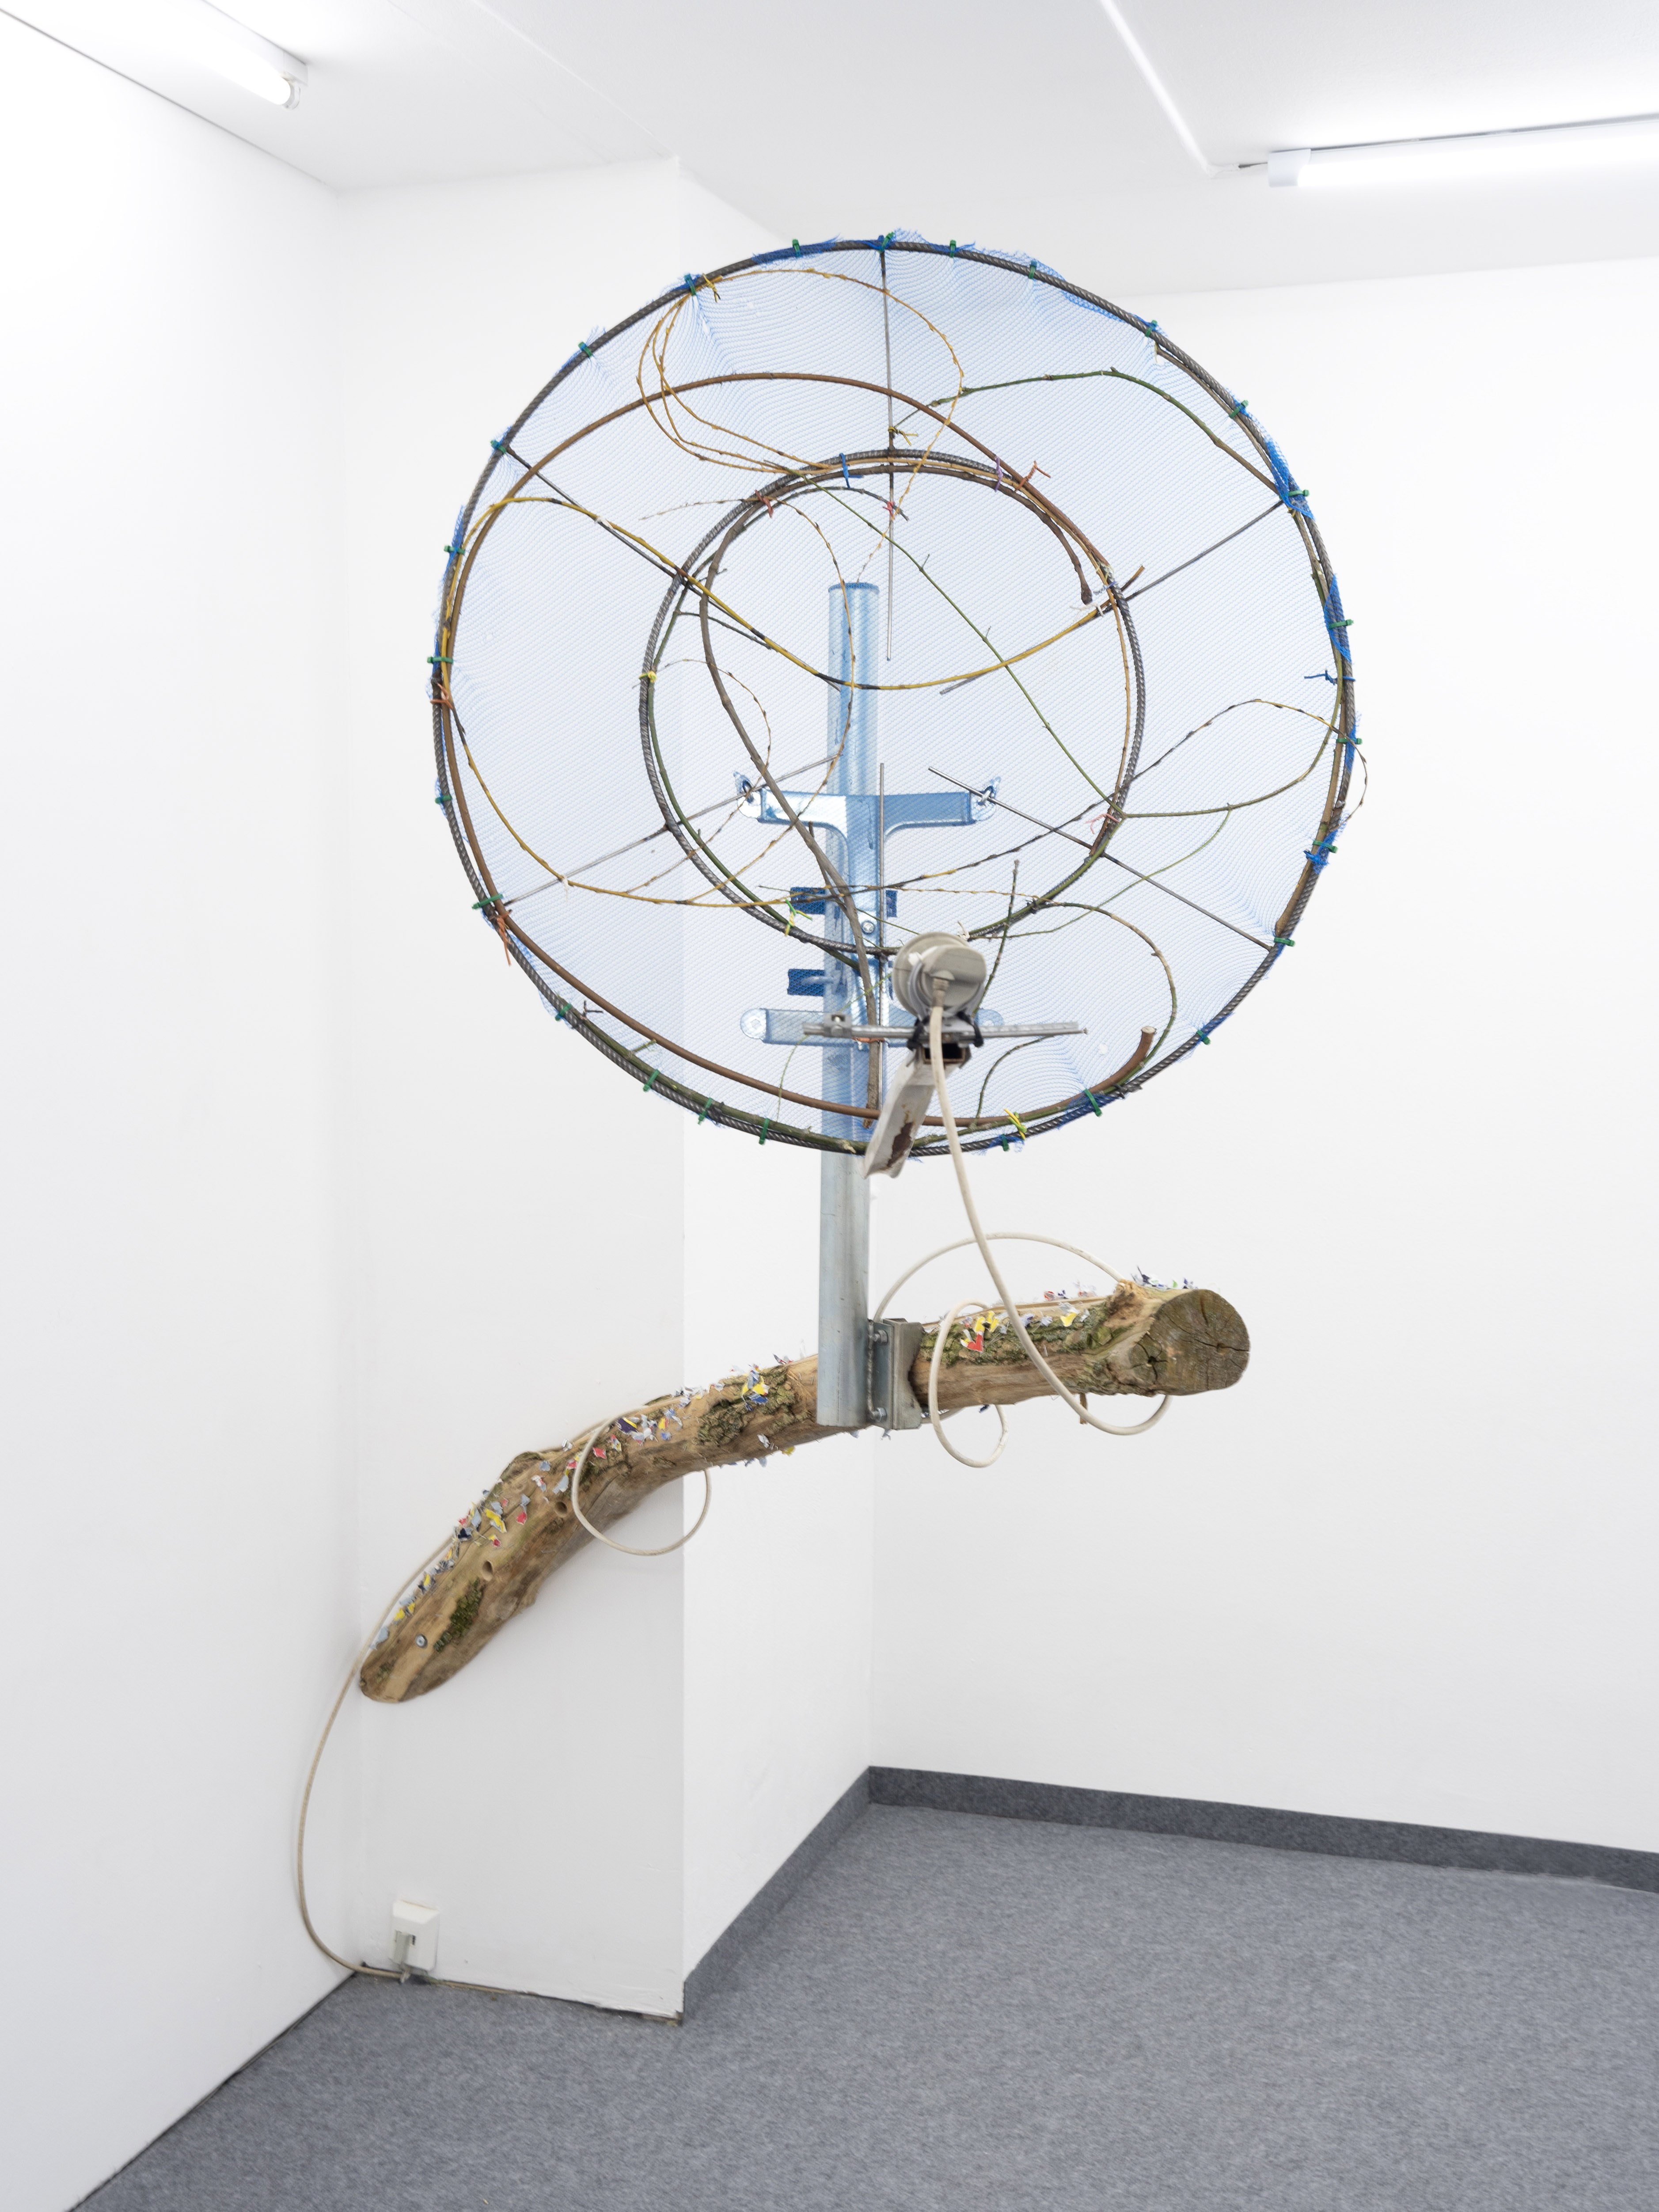 JOE HIGHTON - Big bird, 2023, Wood, metal, mesh, twigs, ties, electronics, rope, paper, screws and hooks, paint, 150 x 200 x 200 cm, 59 x 78 3/4 x 78 3/4 in (JH003)